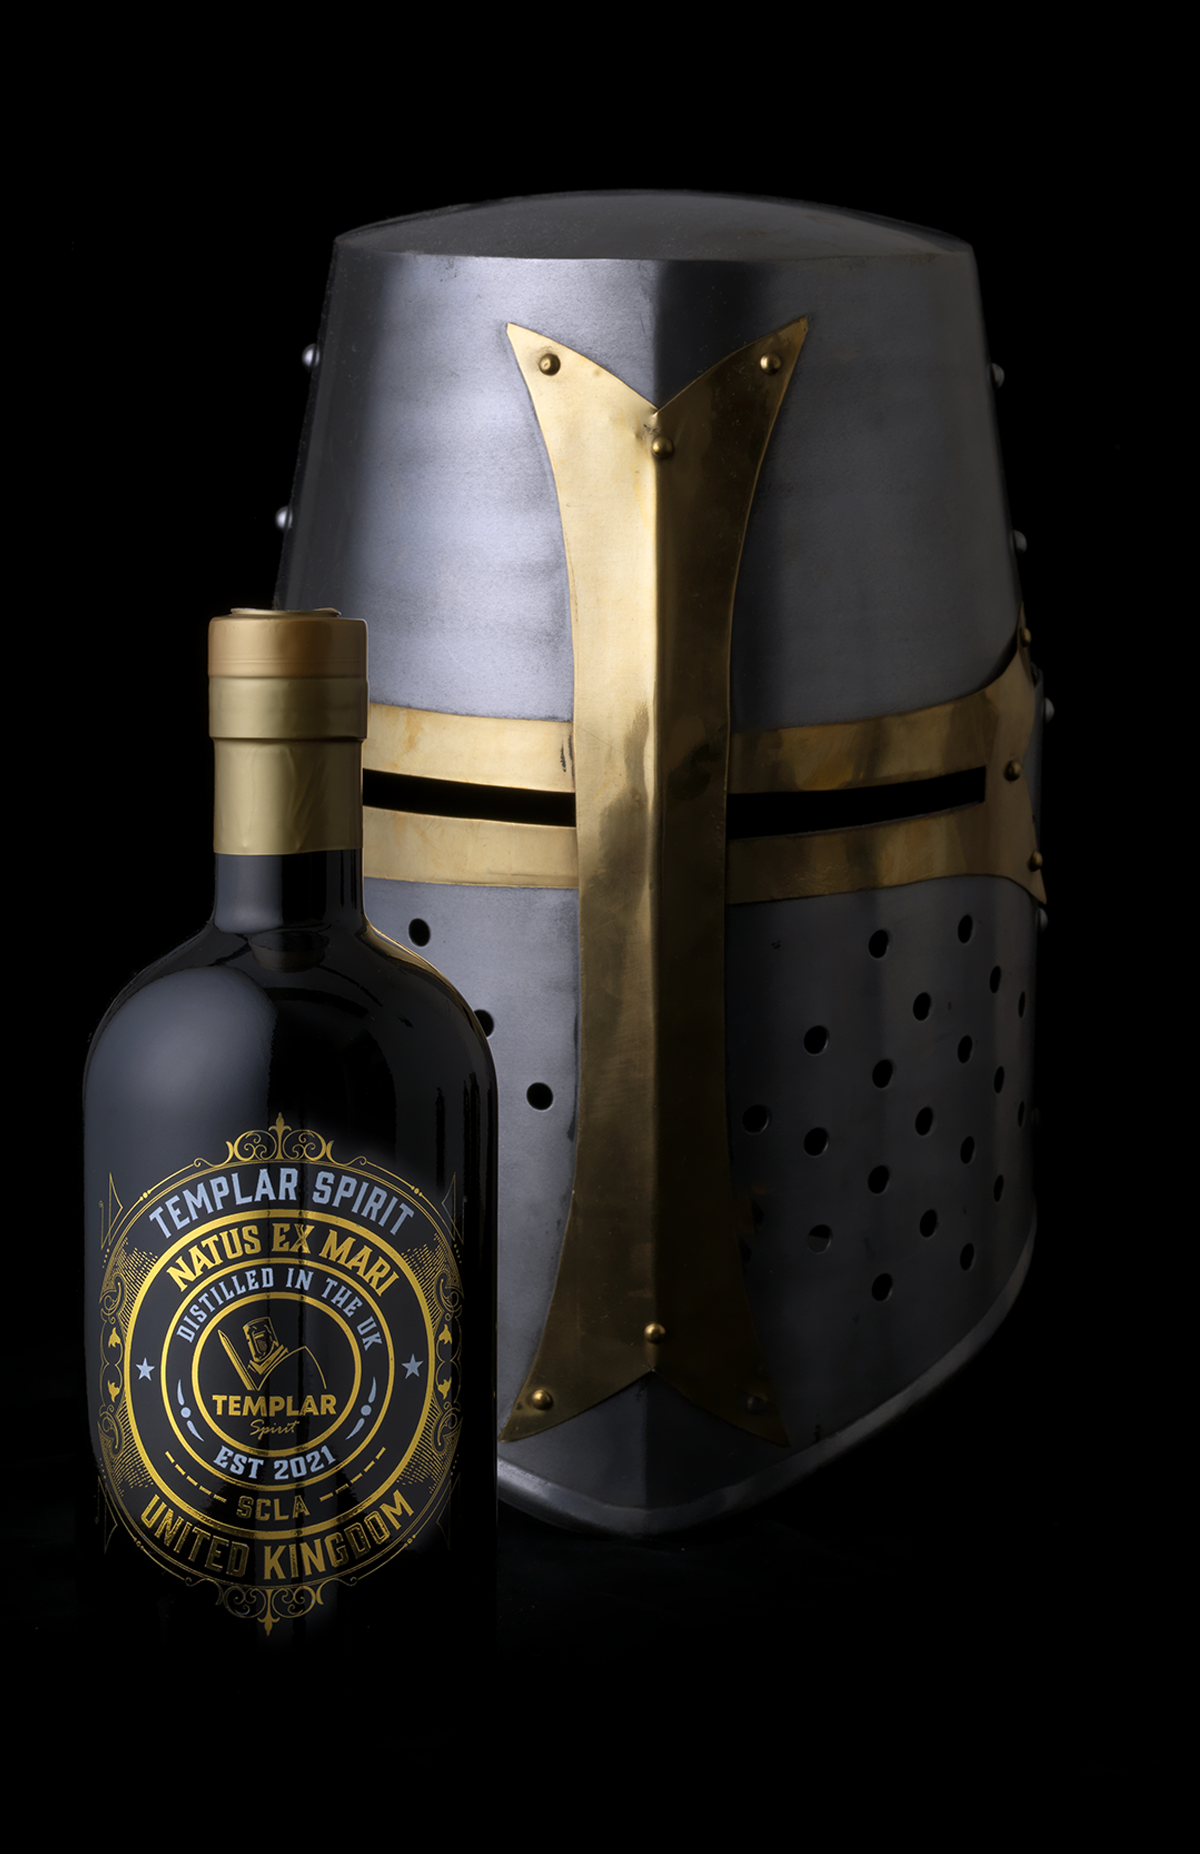 Templar Navy Strength Classic London Dry Gin